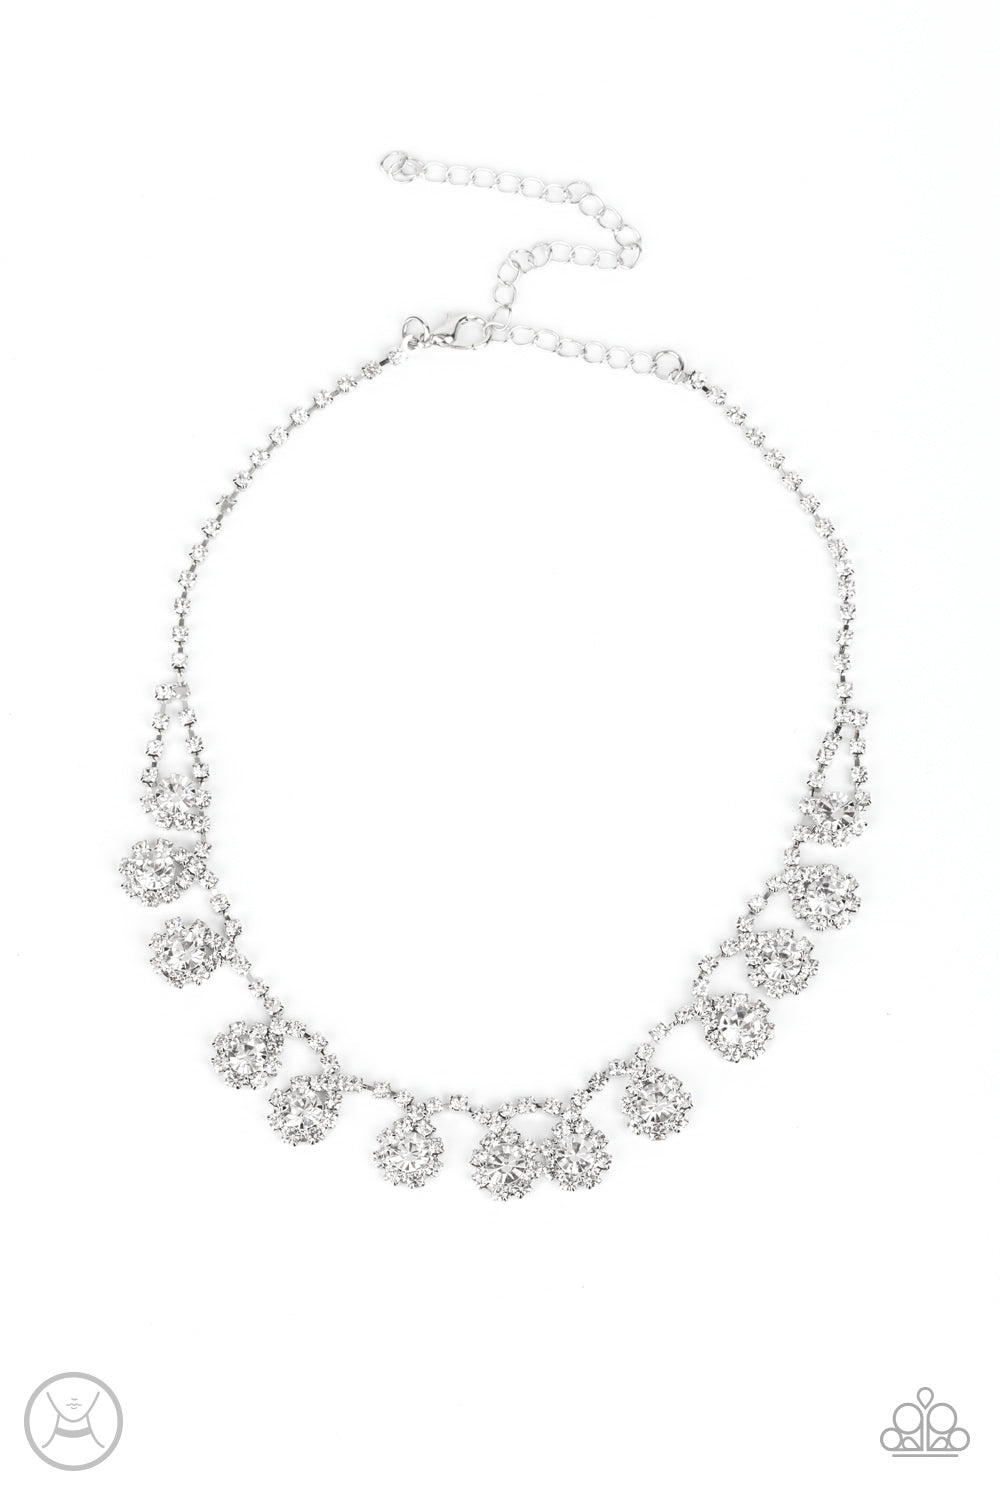 Princess Prominence - White (Rhinestone) Necklace freeshipping - JewLz4u Gemstone Gallery